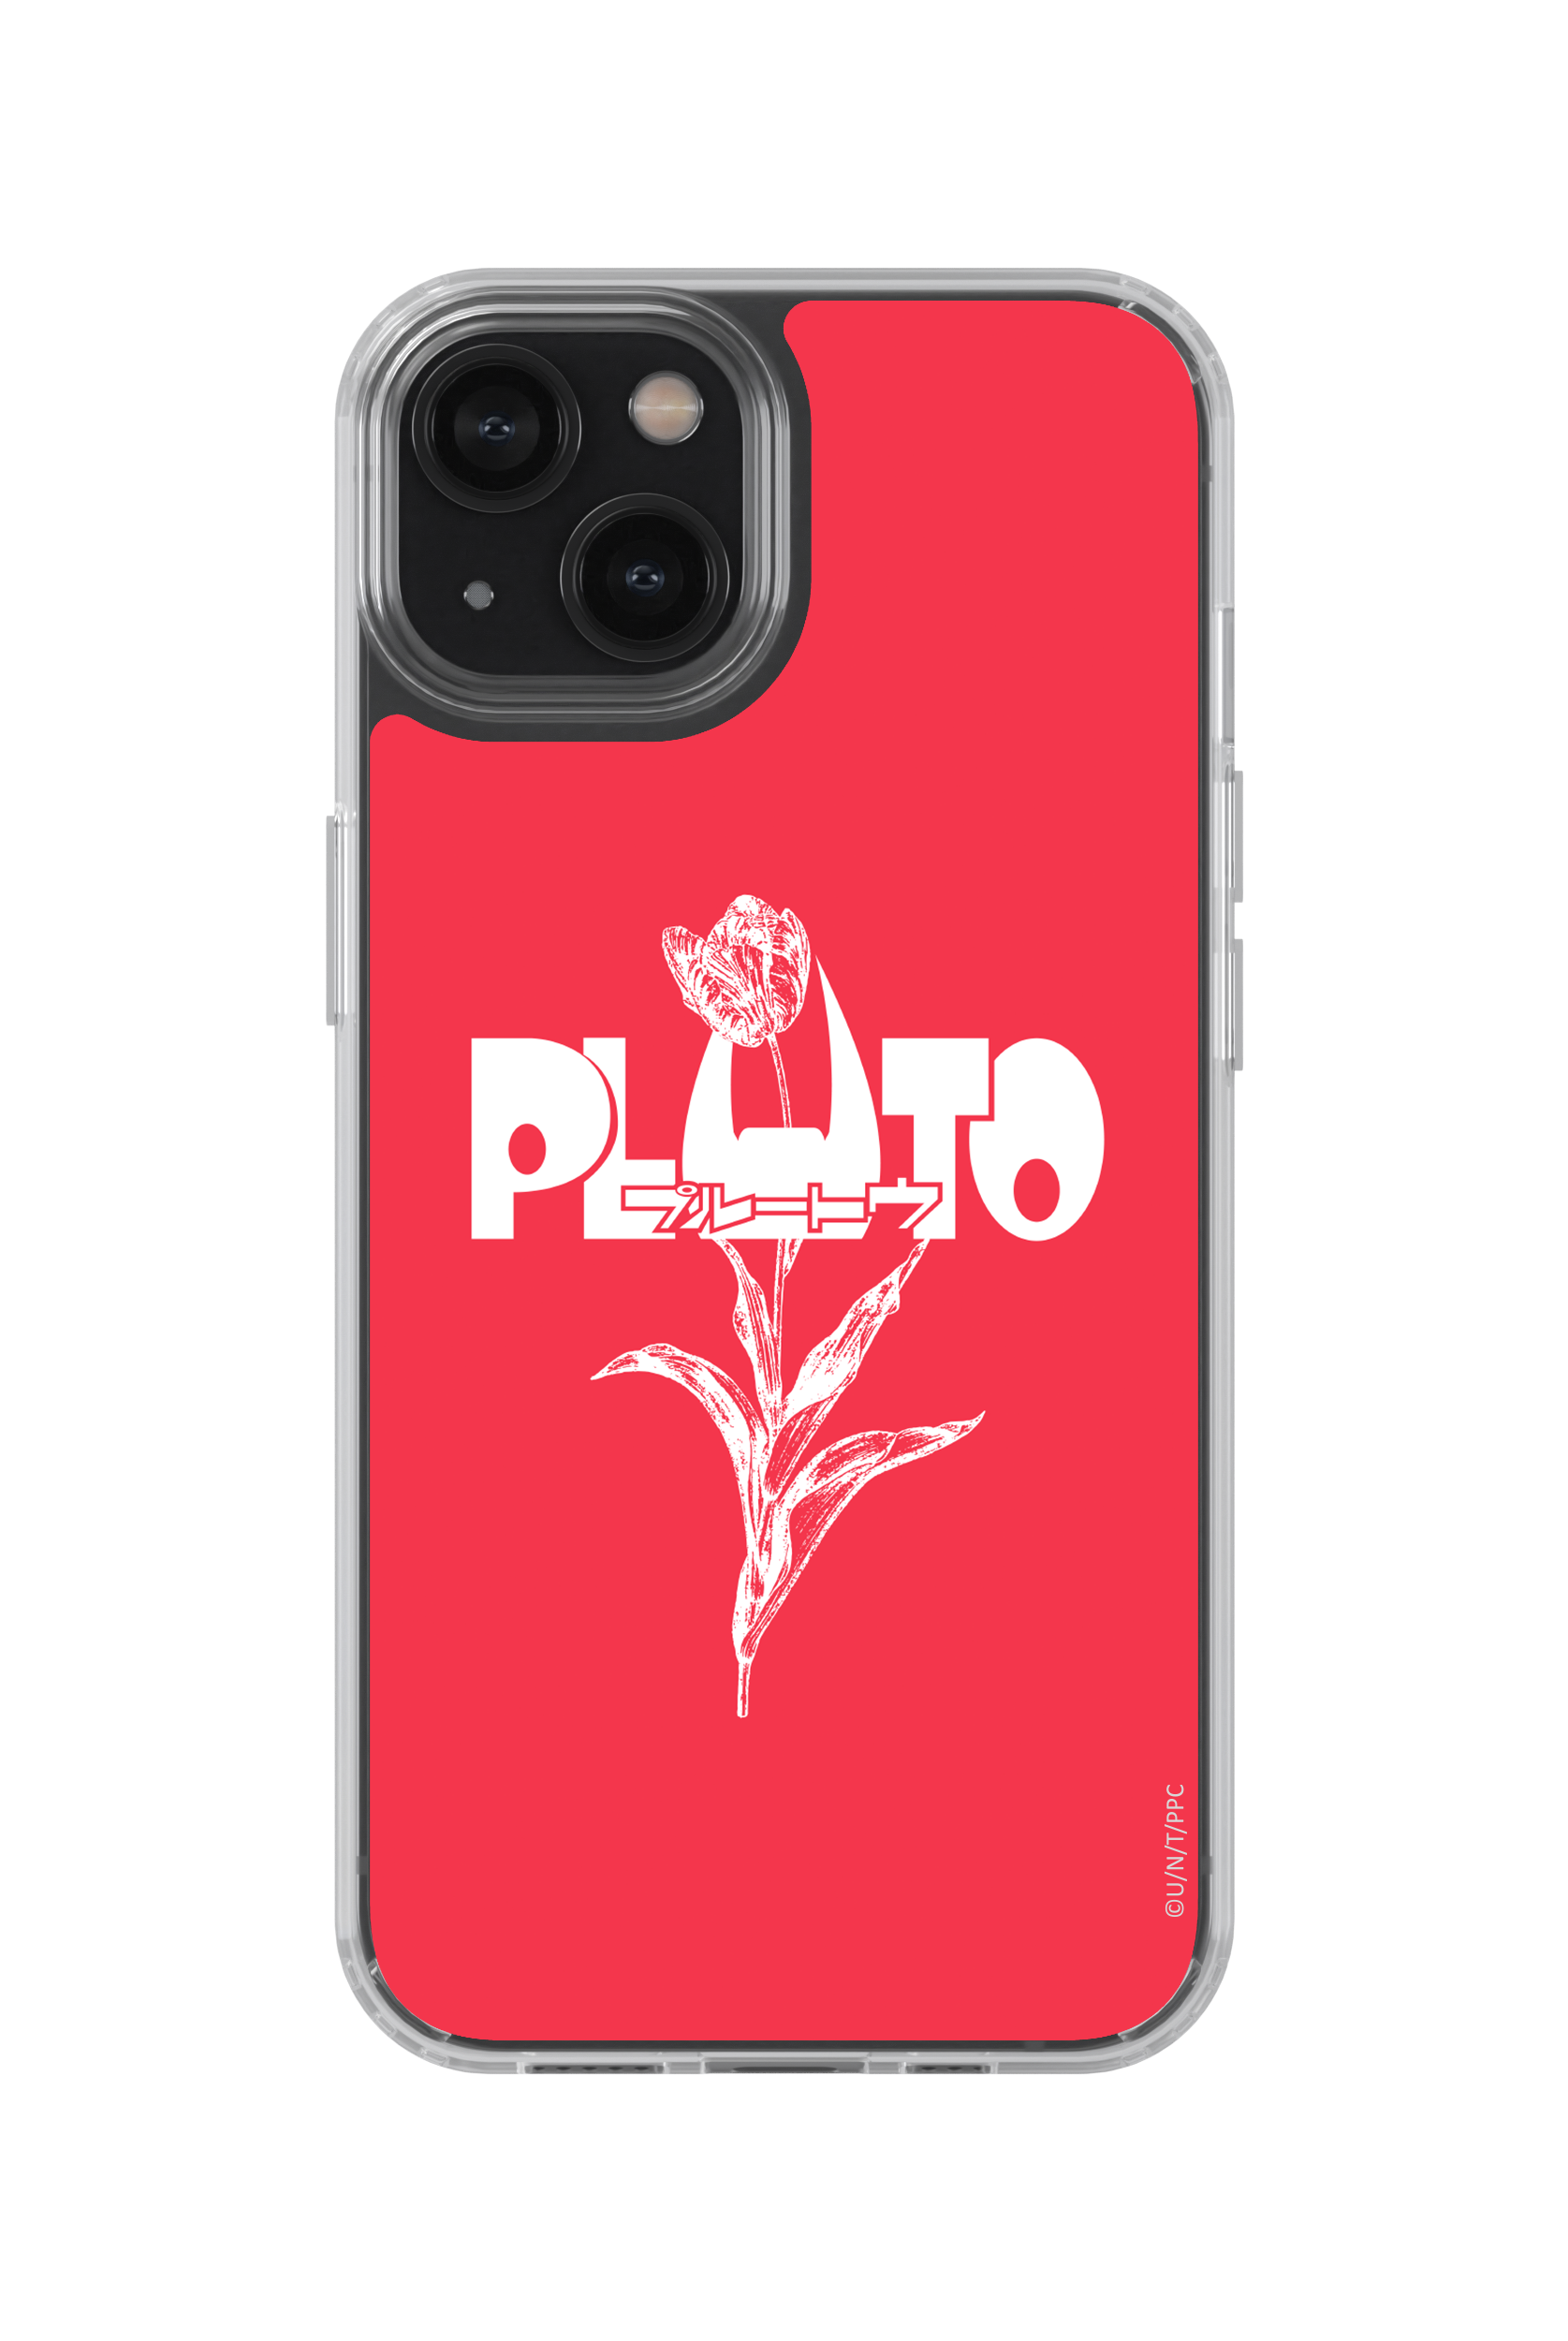 pluto red phone case